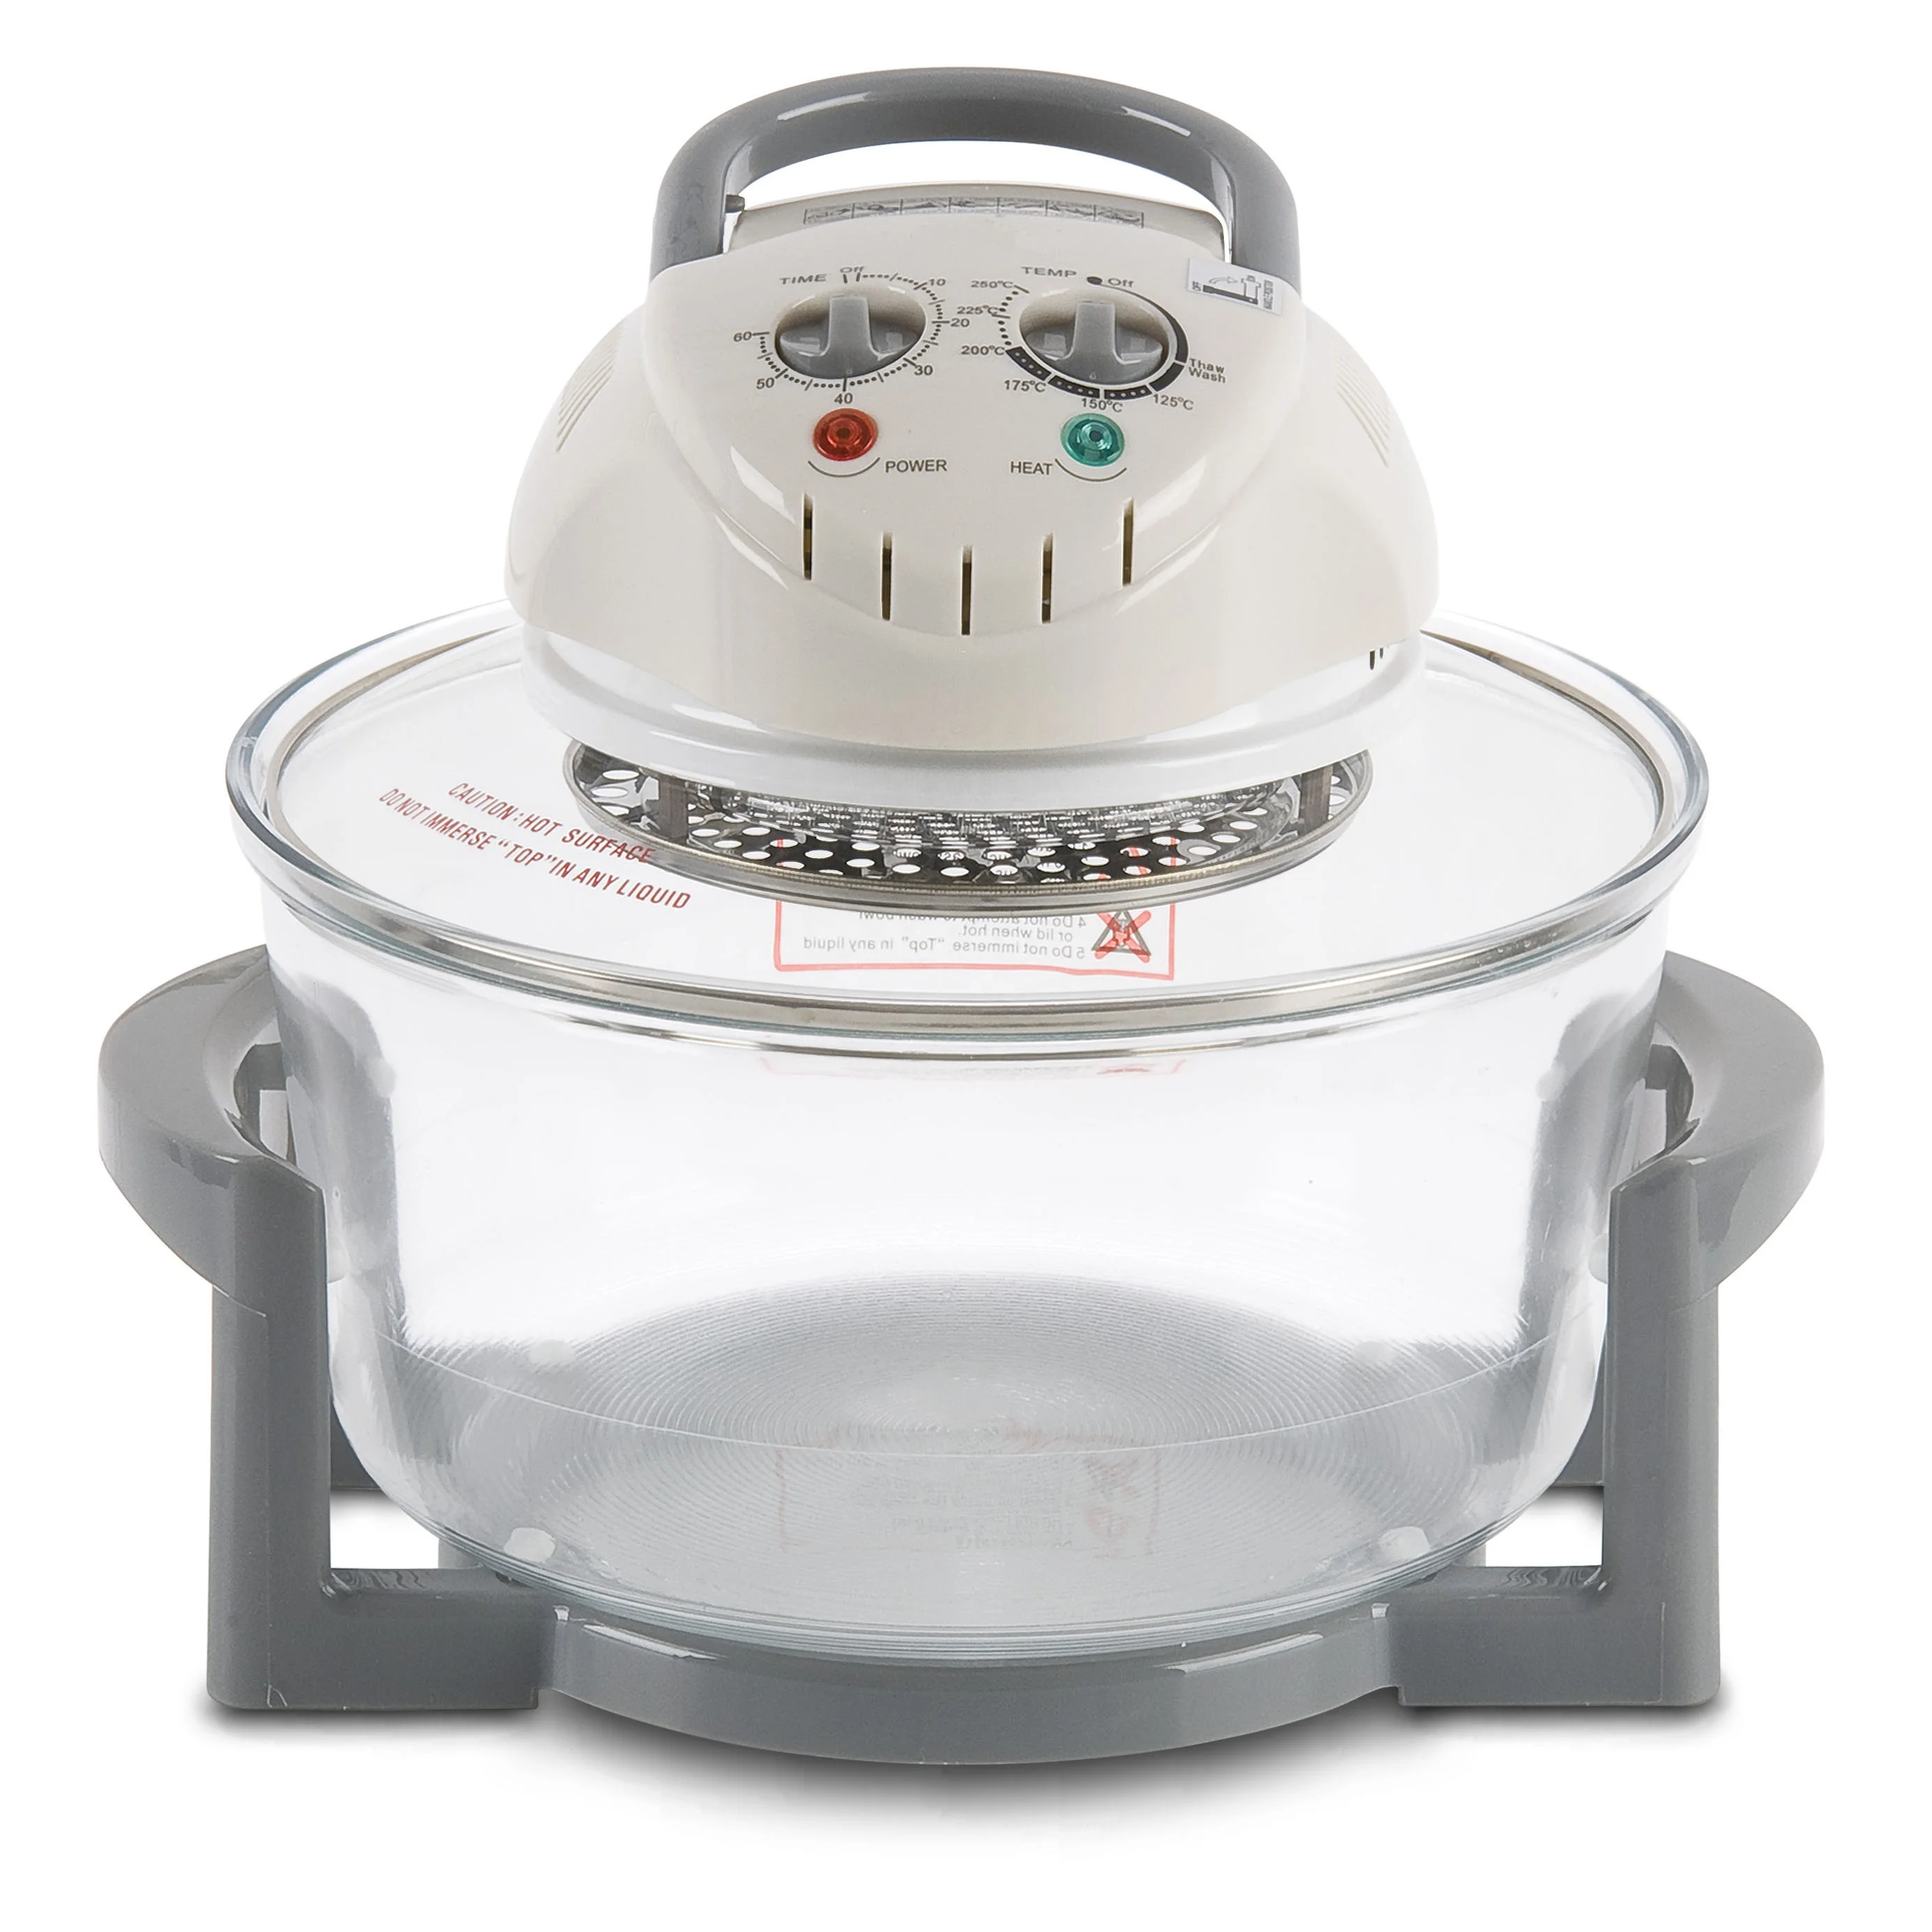 Premium safe base accessories glass bowl head tandoor turbo mechanical cooker halogen oven